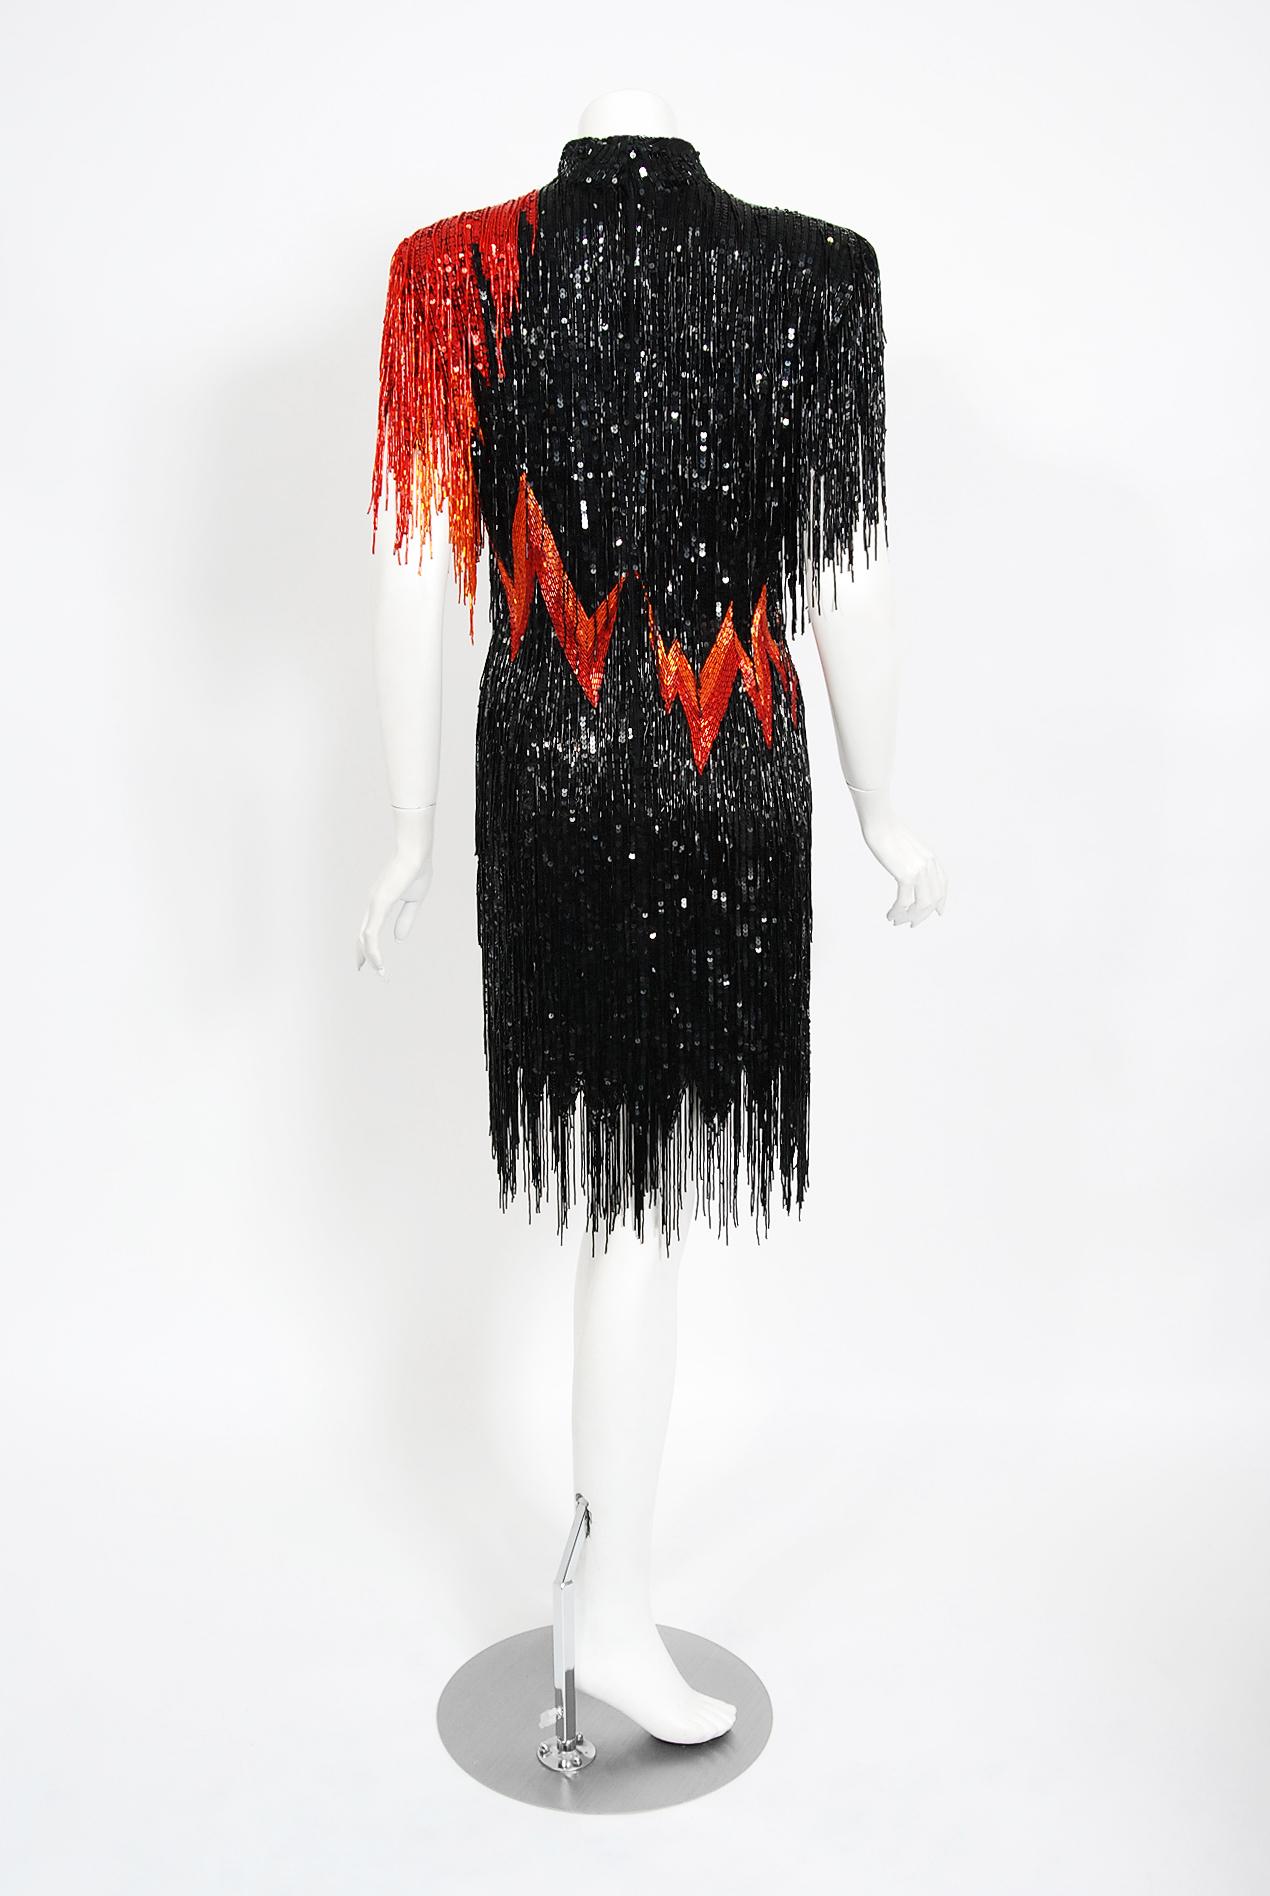 Women's Vintage 1982 Bob Mackie Couture Lightning Bolt Black & Red Beaded Fringe Dress 